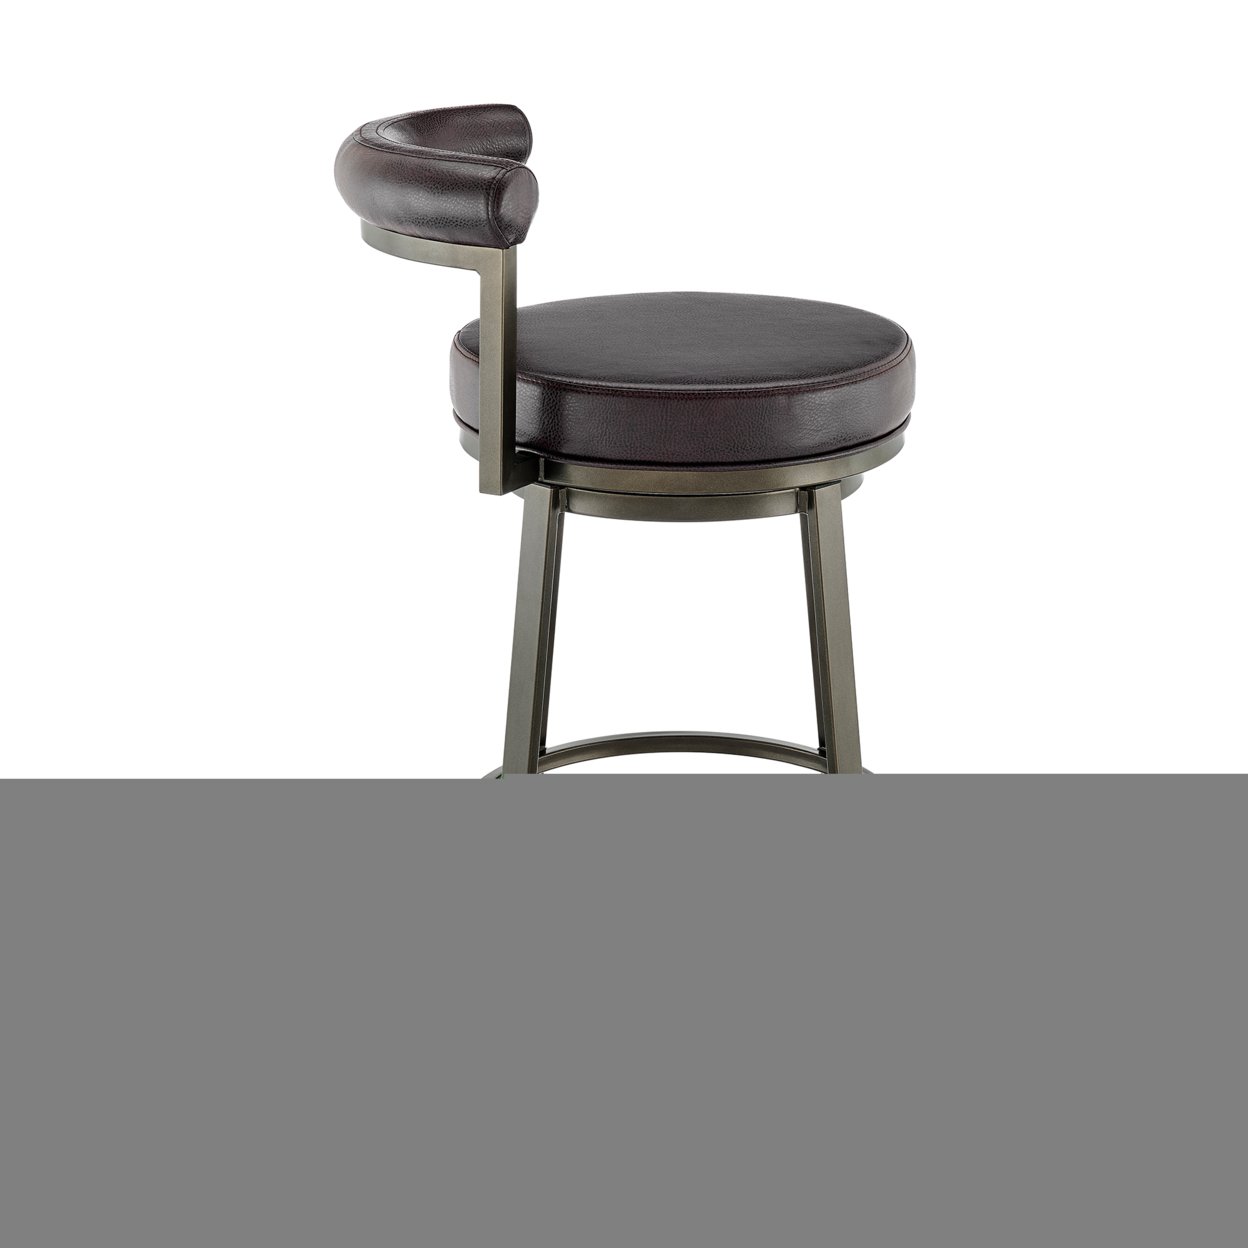 Elysha 30 Inch Swivel Bar Stool Chair, Round Cushion, Brown Faux Leather- Saltoro Sherpi